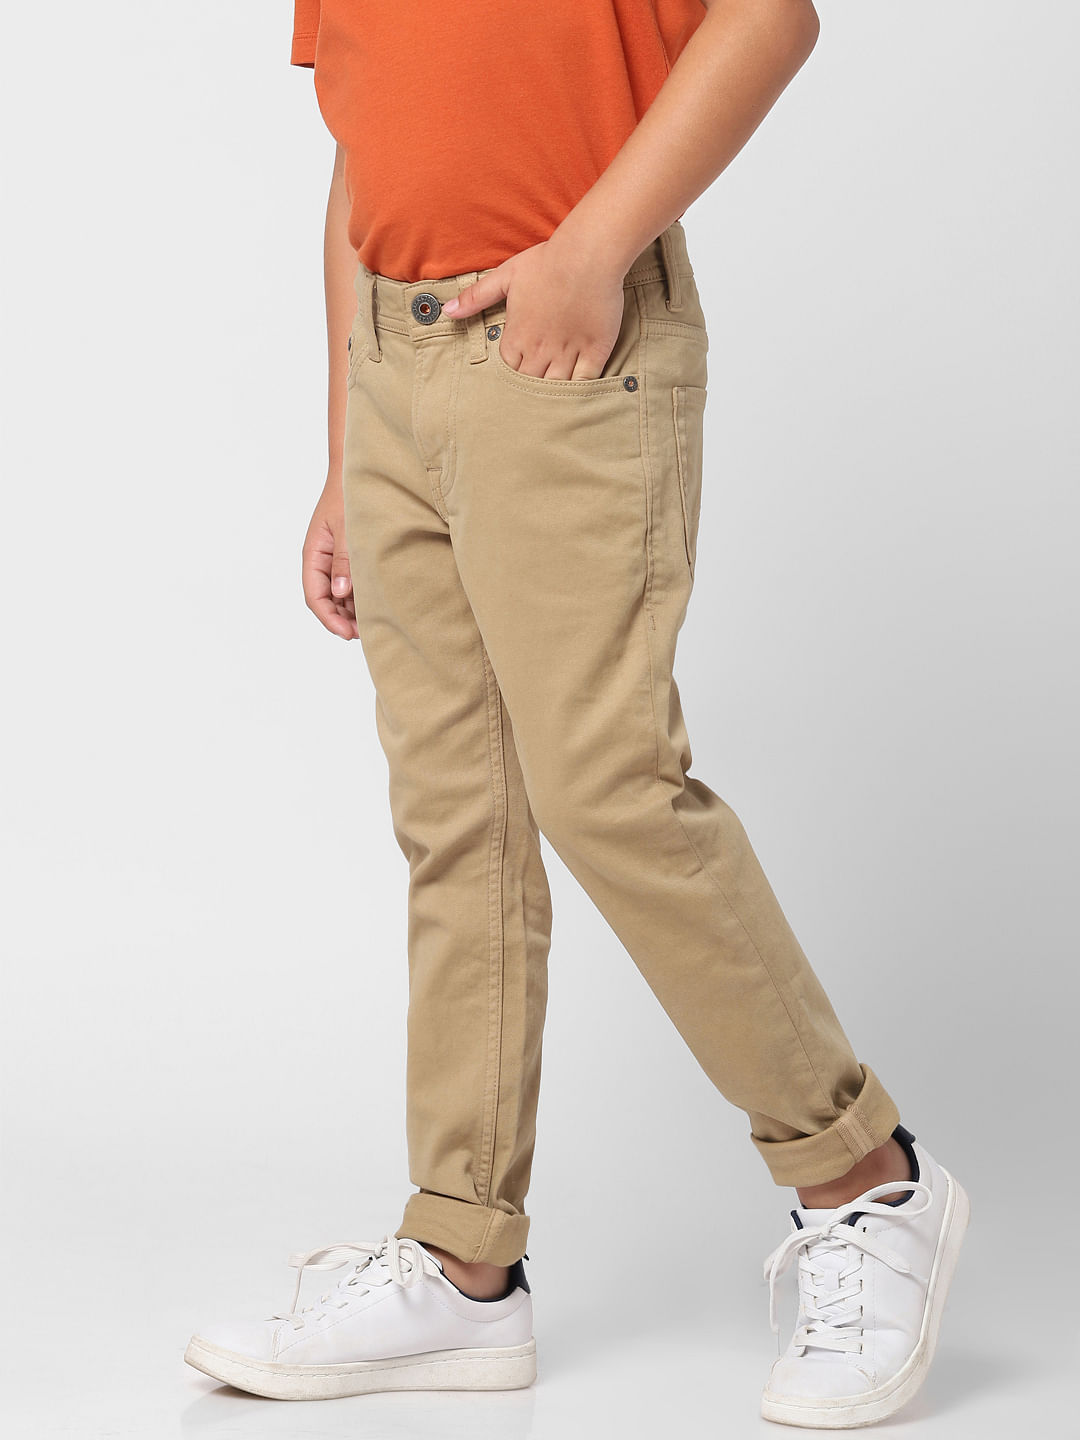 Hemsworth Brown Pants